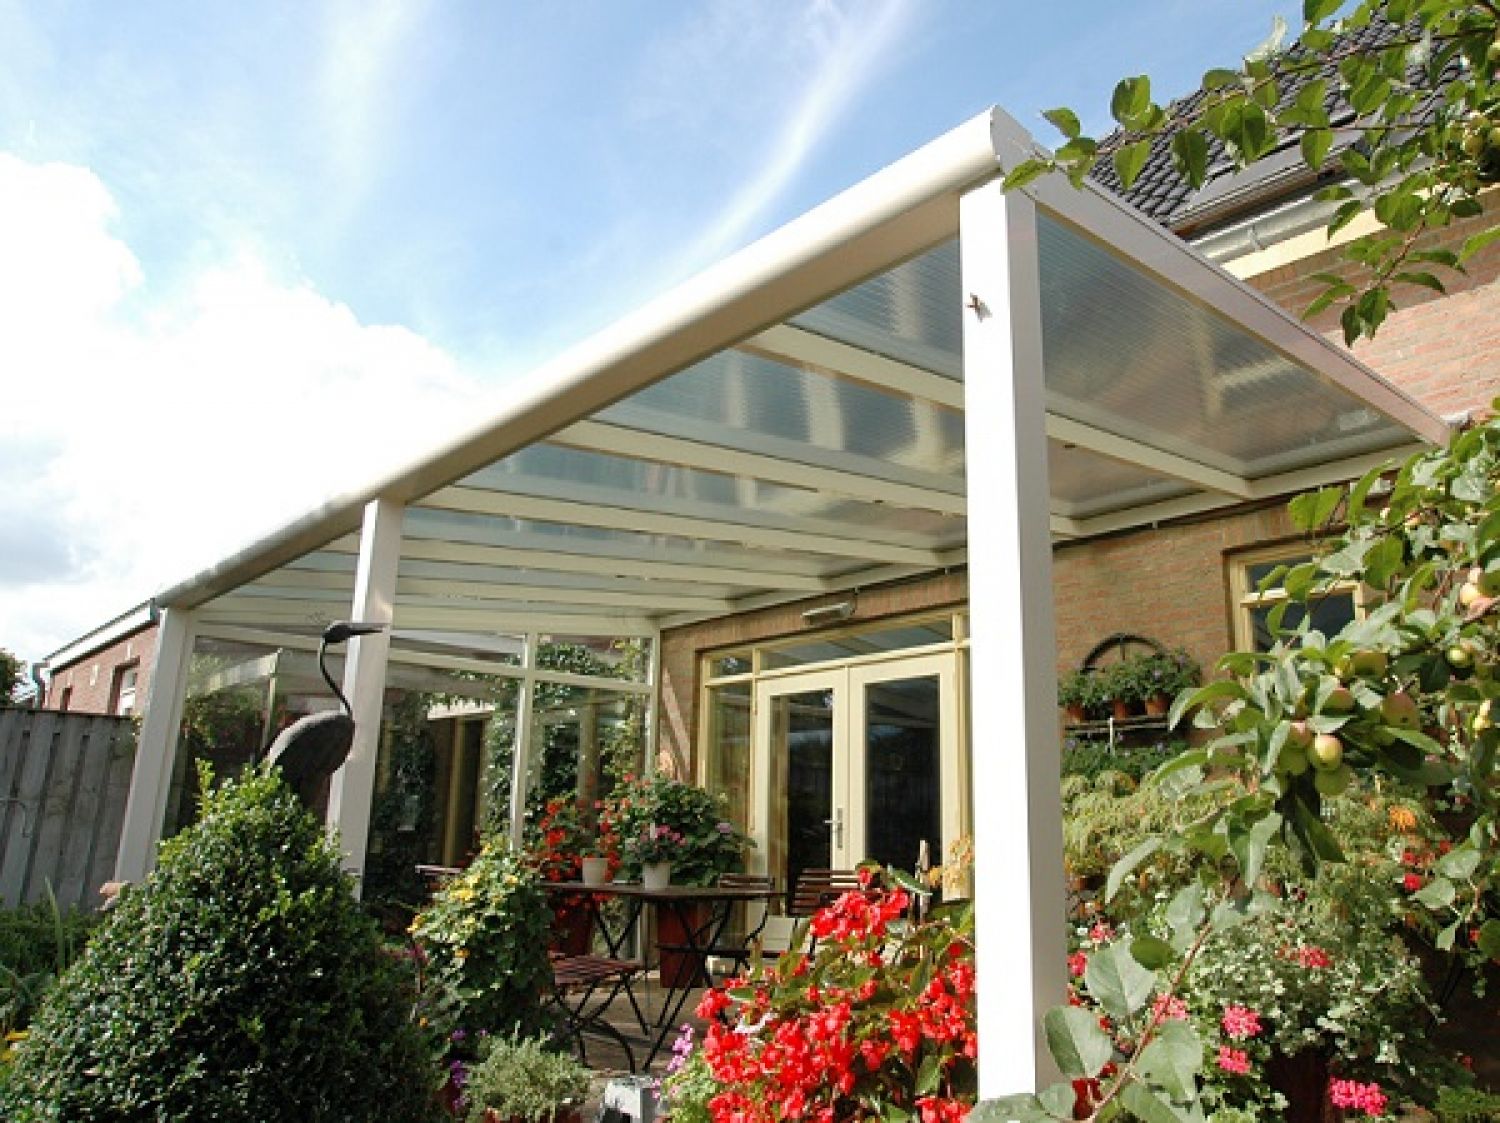 Profiline XXL veranda 1100x300 cm - polycarbonaat dak